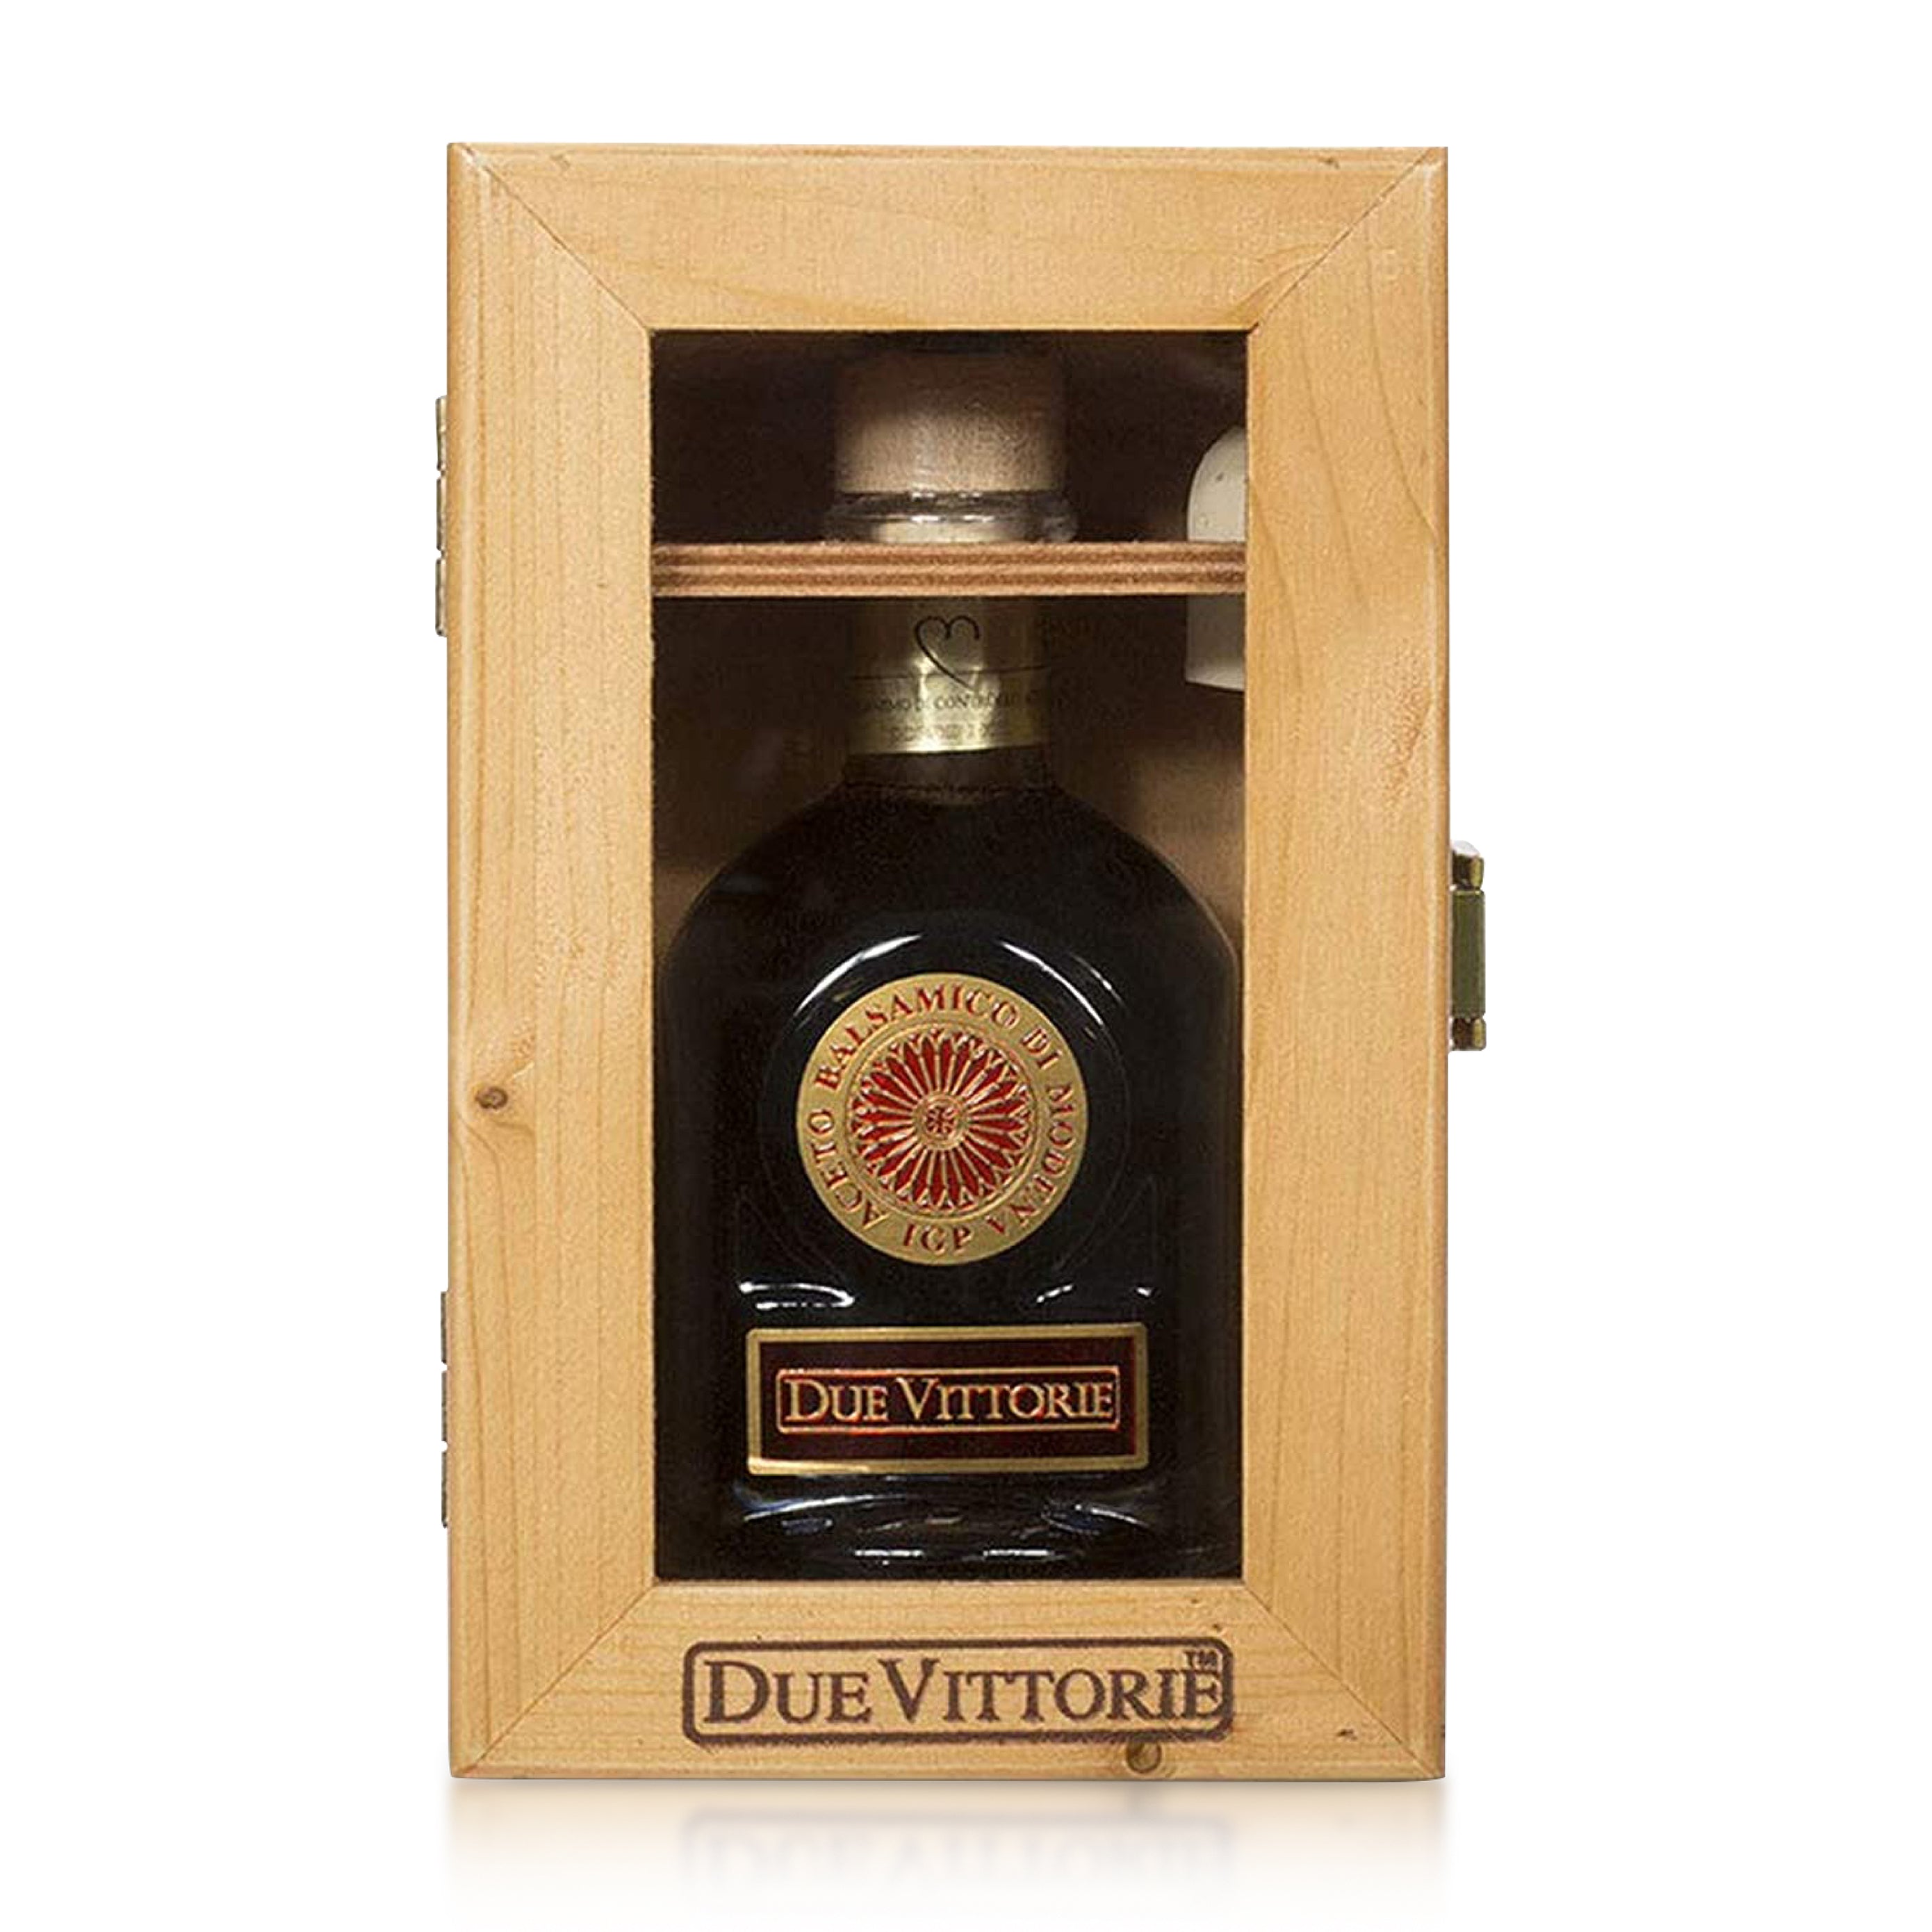 IGP Oro Gold - Premium Edition Balsamic Vinegar - by Due Vittorie